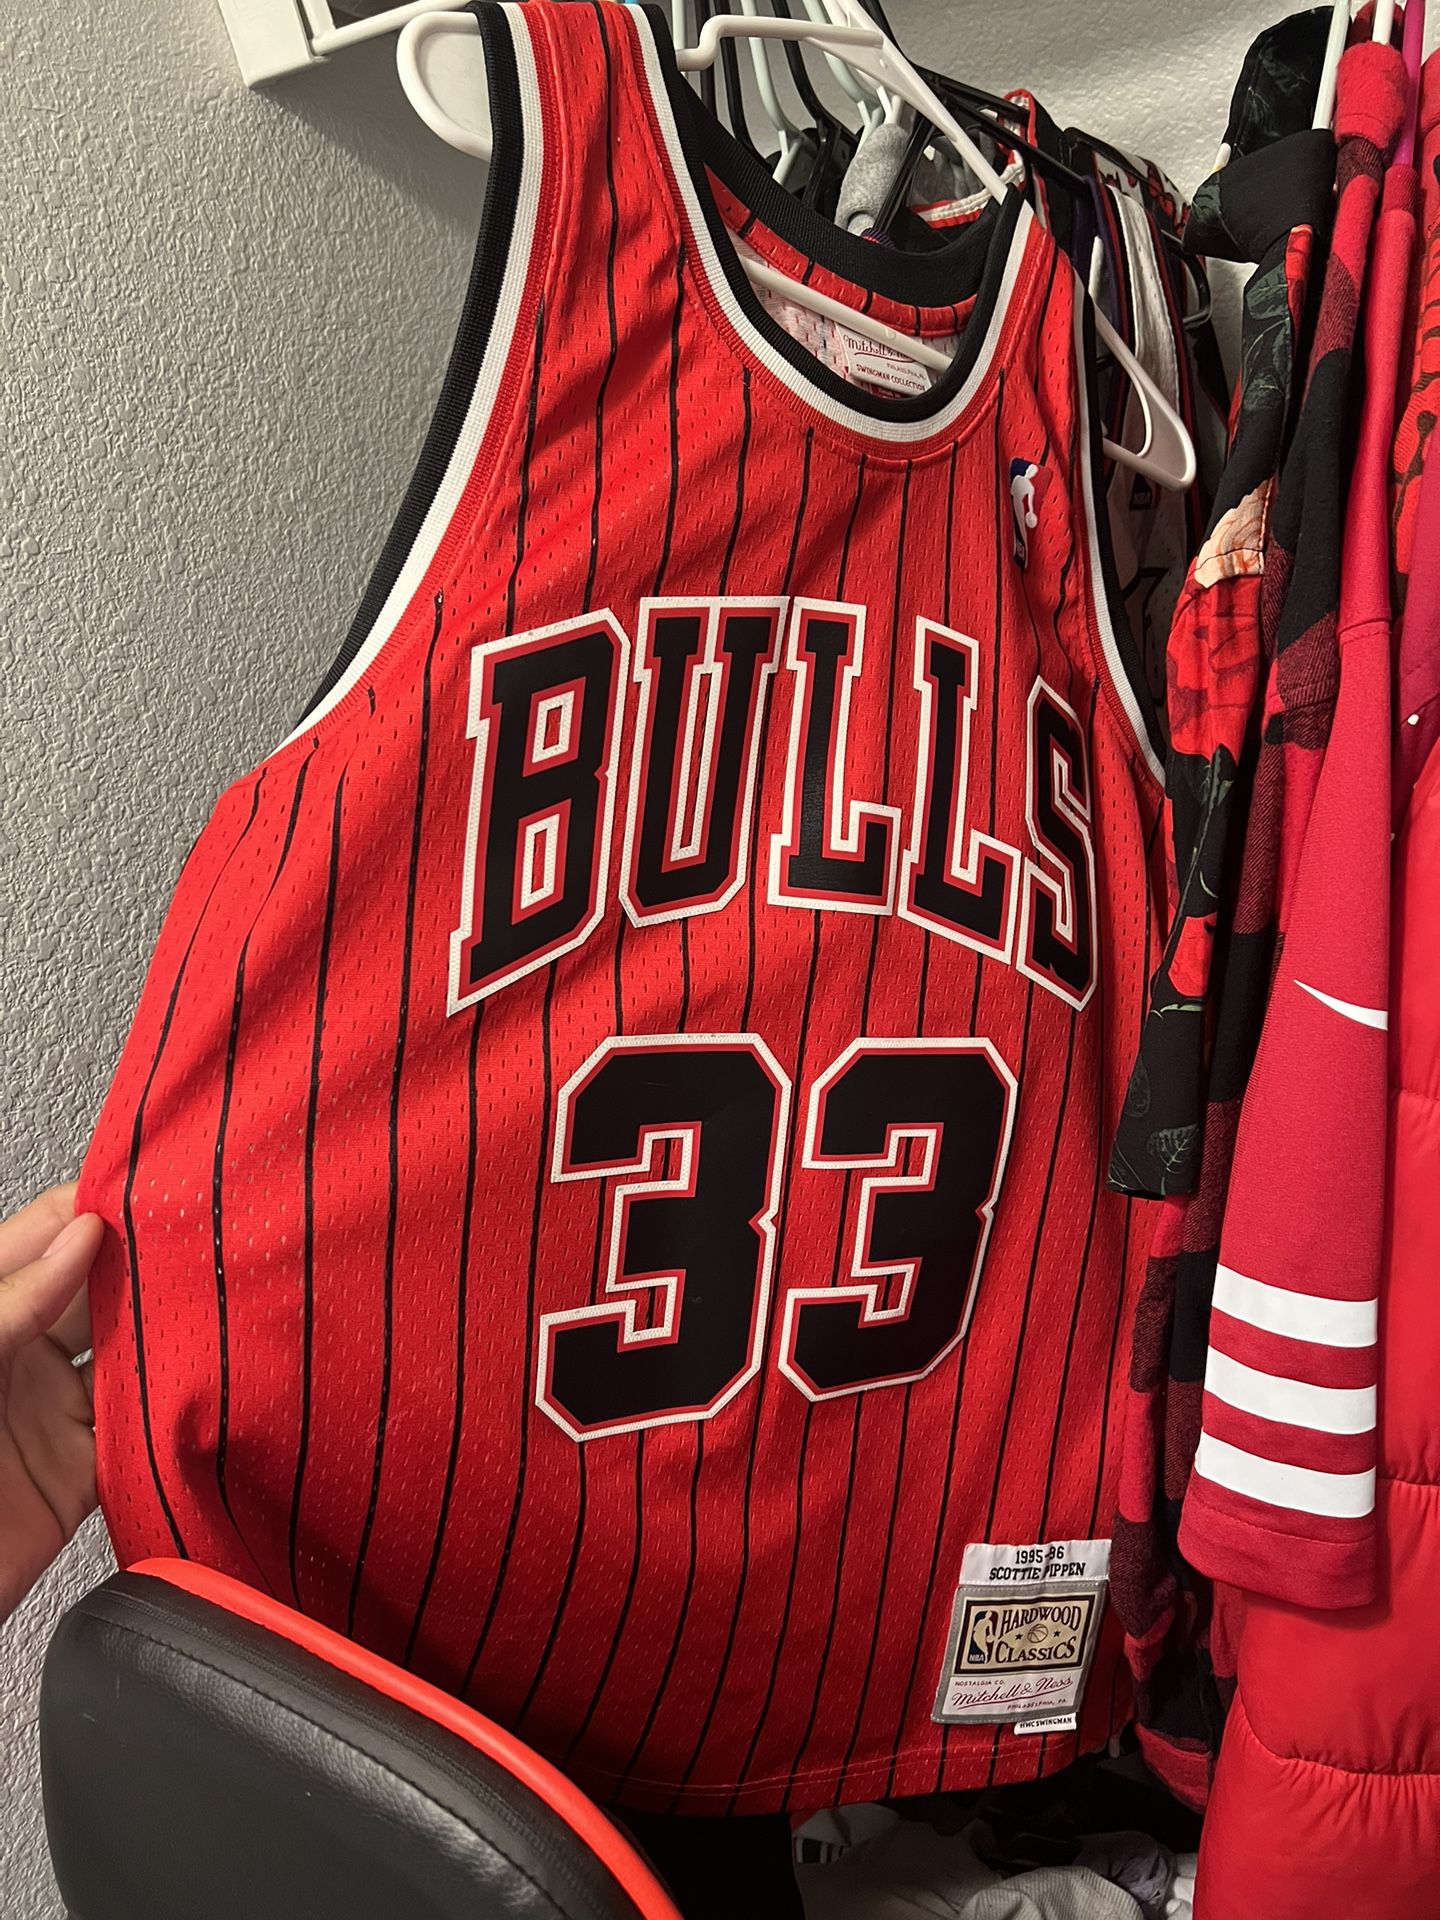 Basketball Jerseys for Sale in Las Vegas, NV - OfferUp